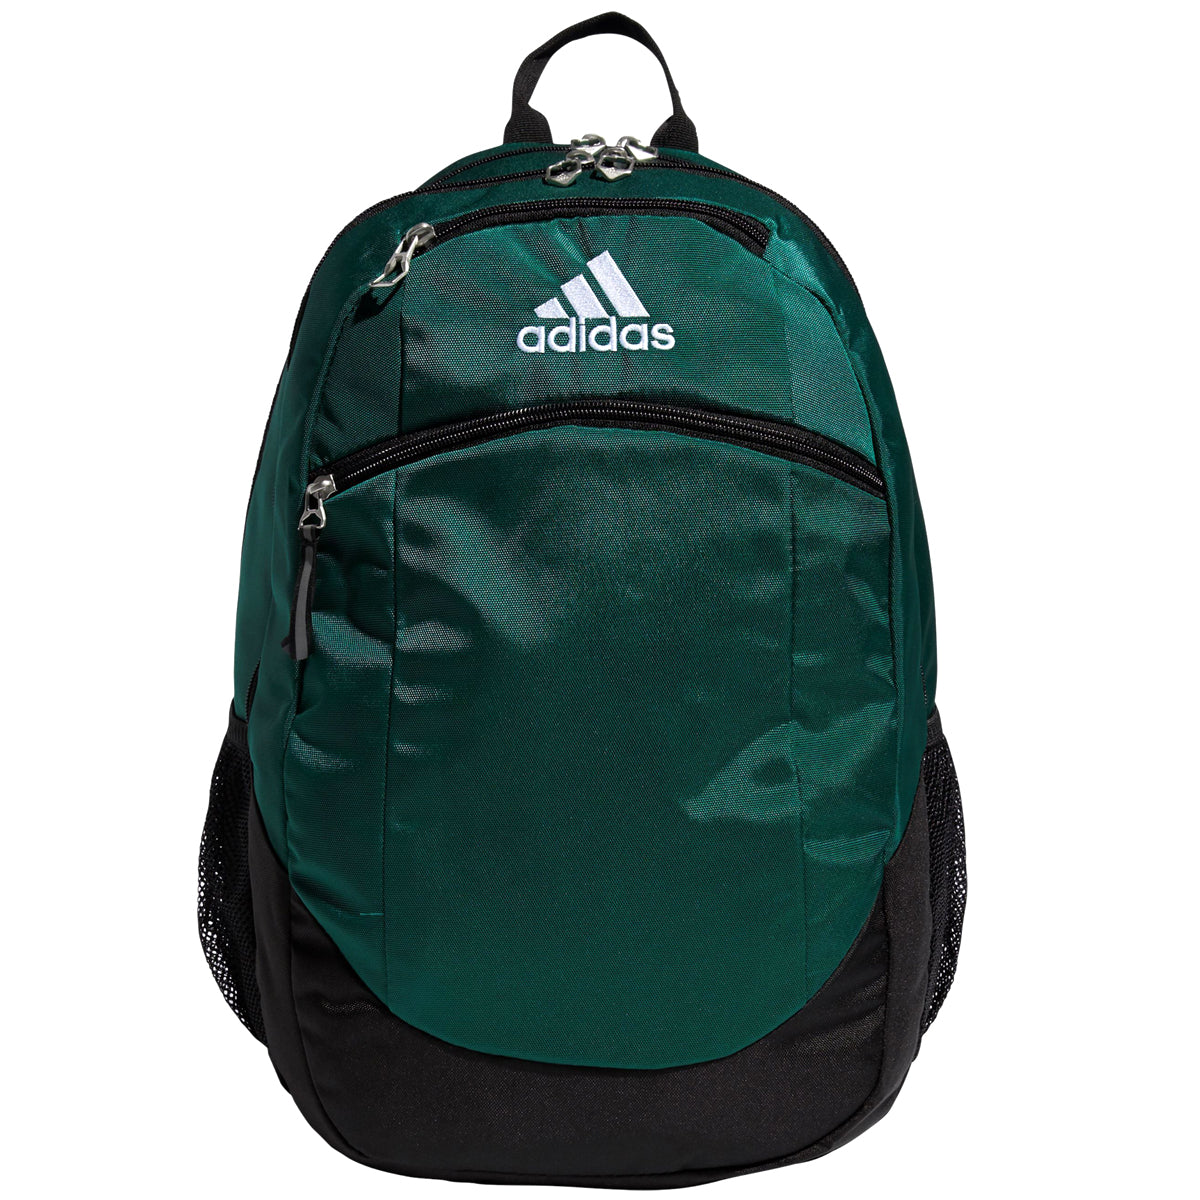 adidas Striker II Team Backpack Bags Adidas One Size Collegiate Green/Black/White 